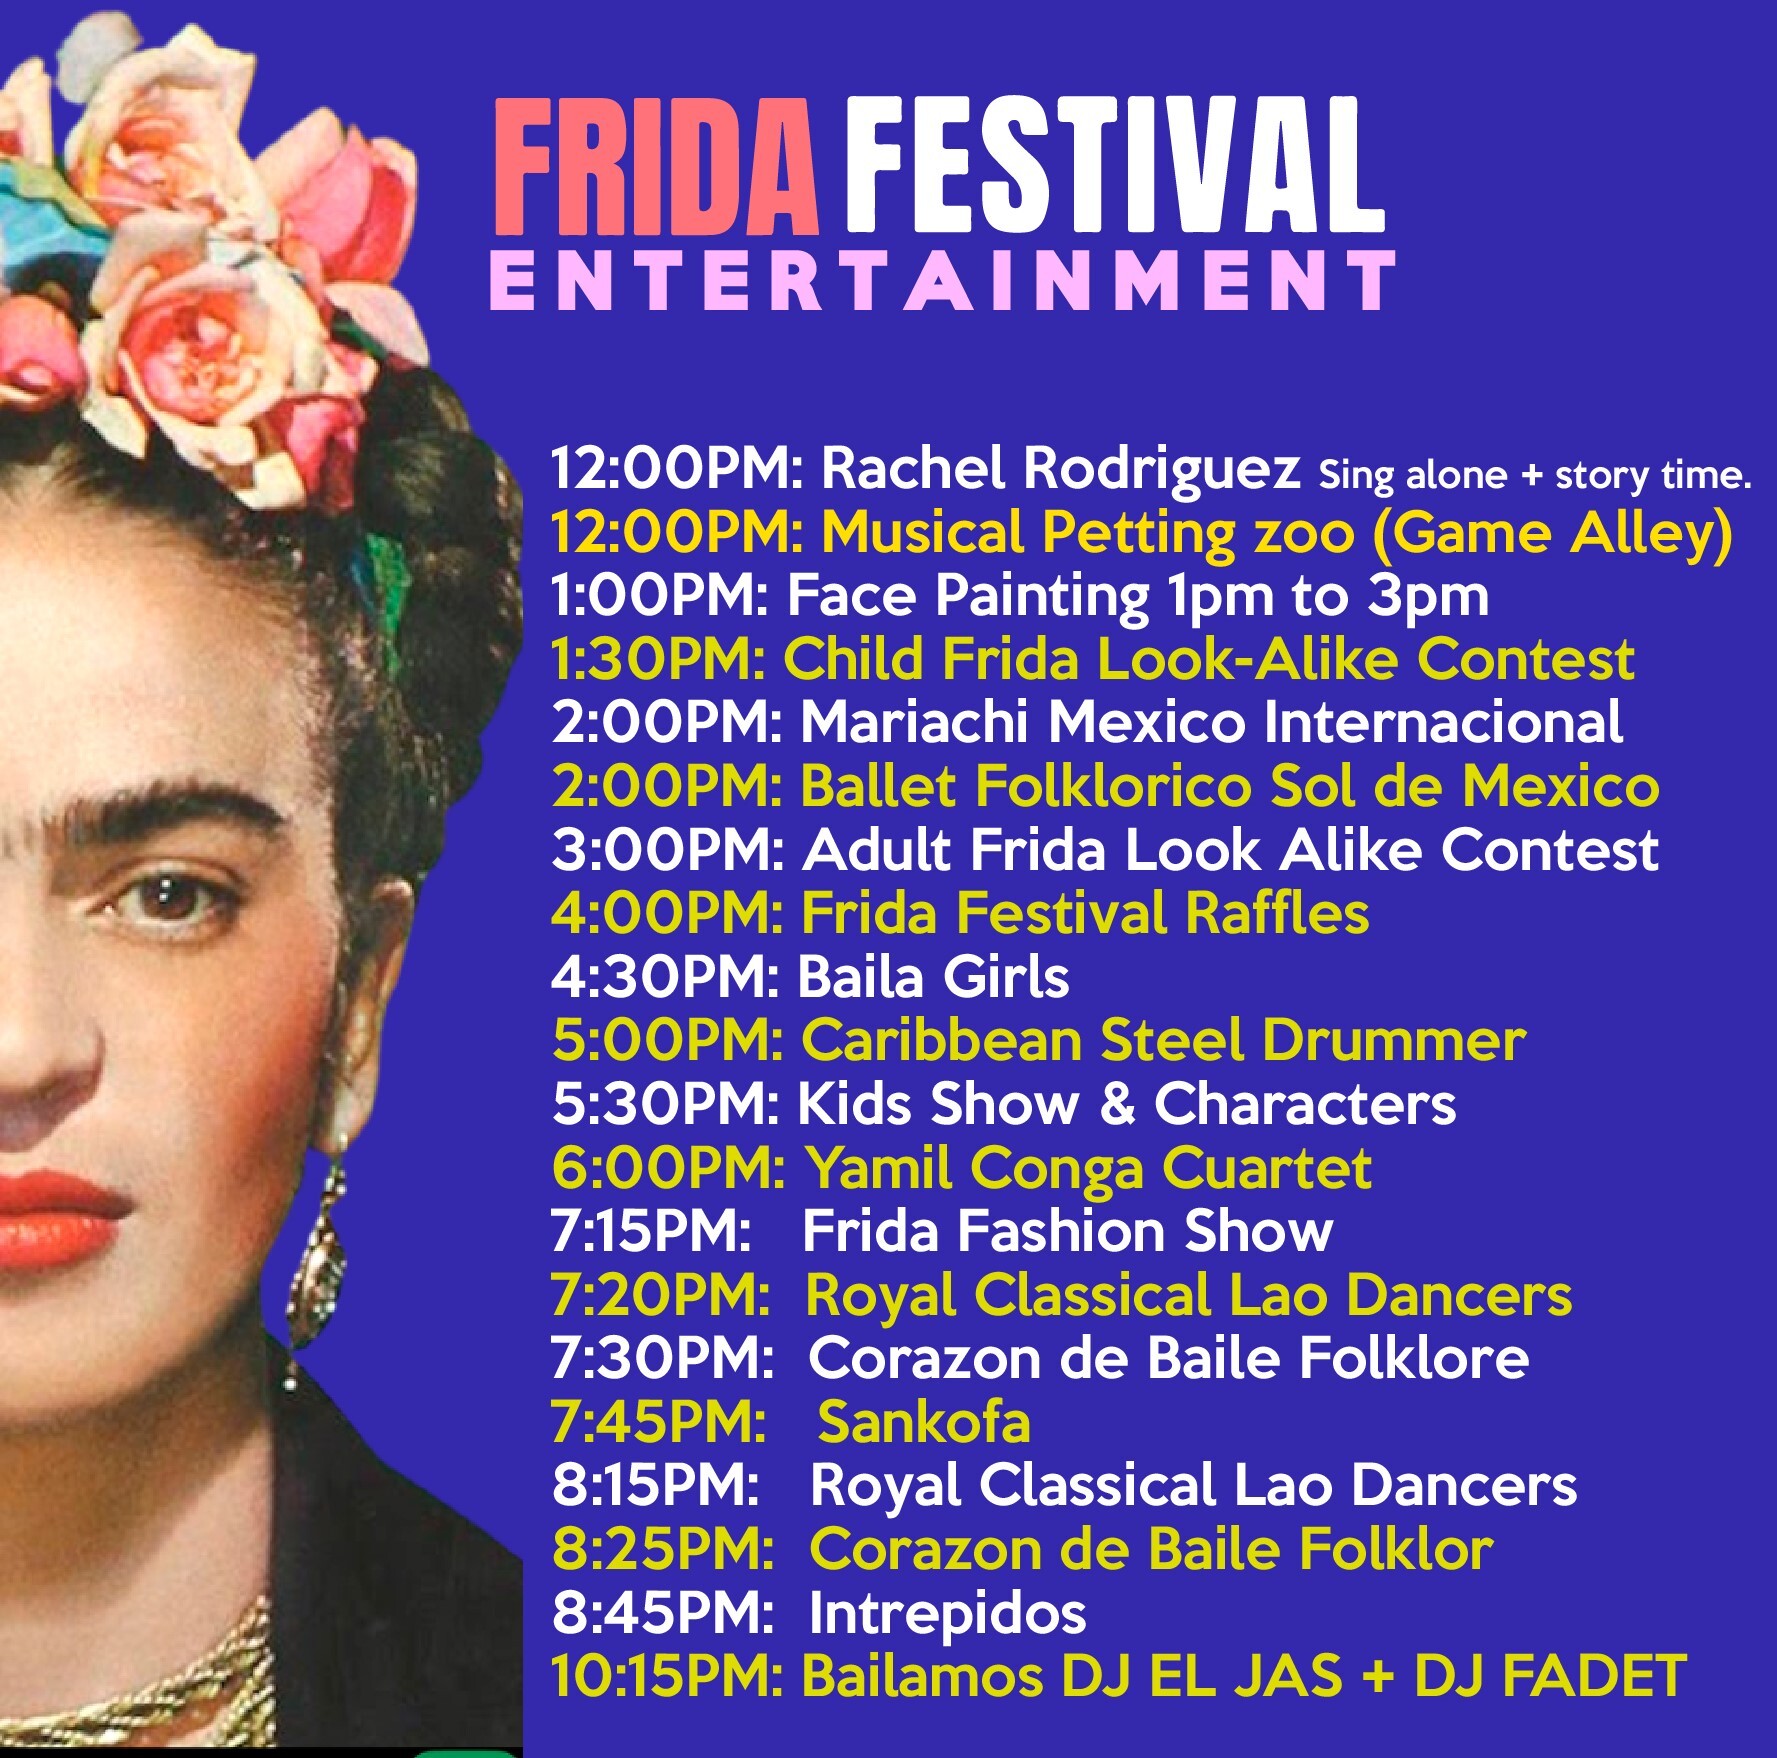 Frida Festival Entertainment Schedule